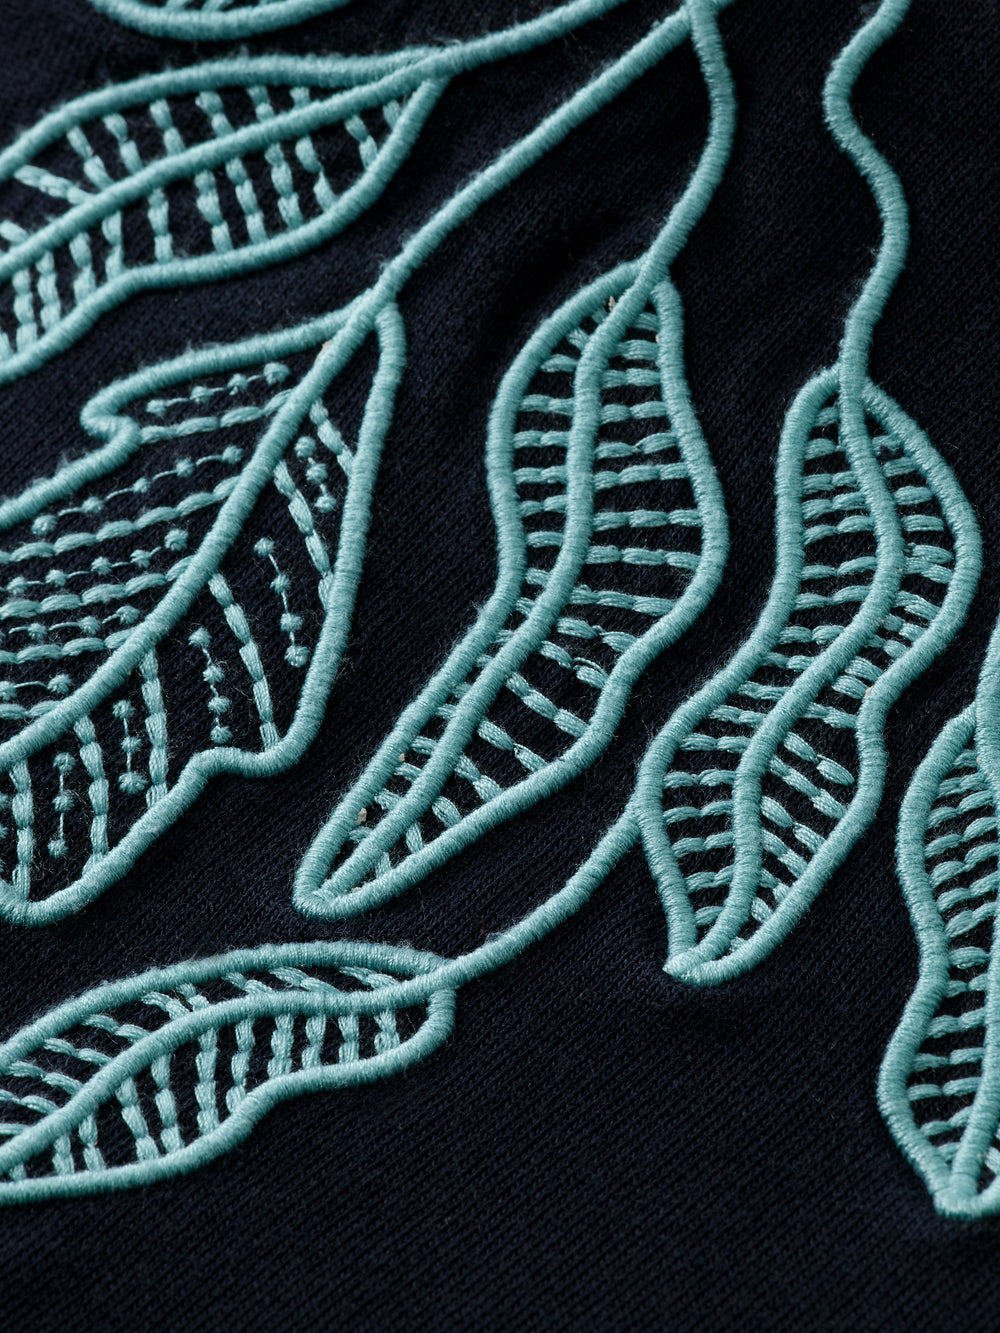 Floral embroidery hoodie - Scotch & Soda NZ